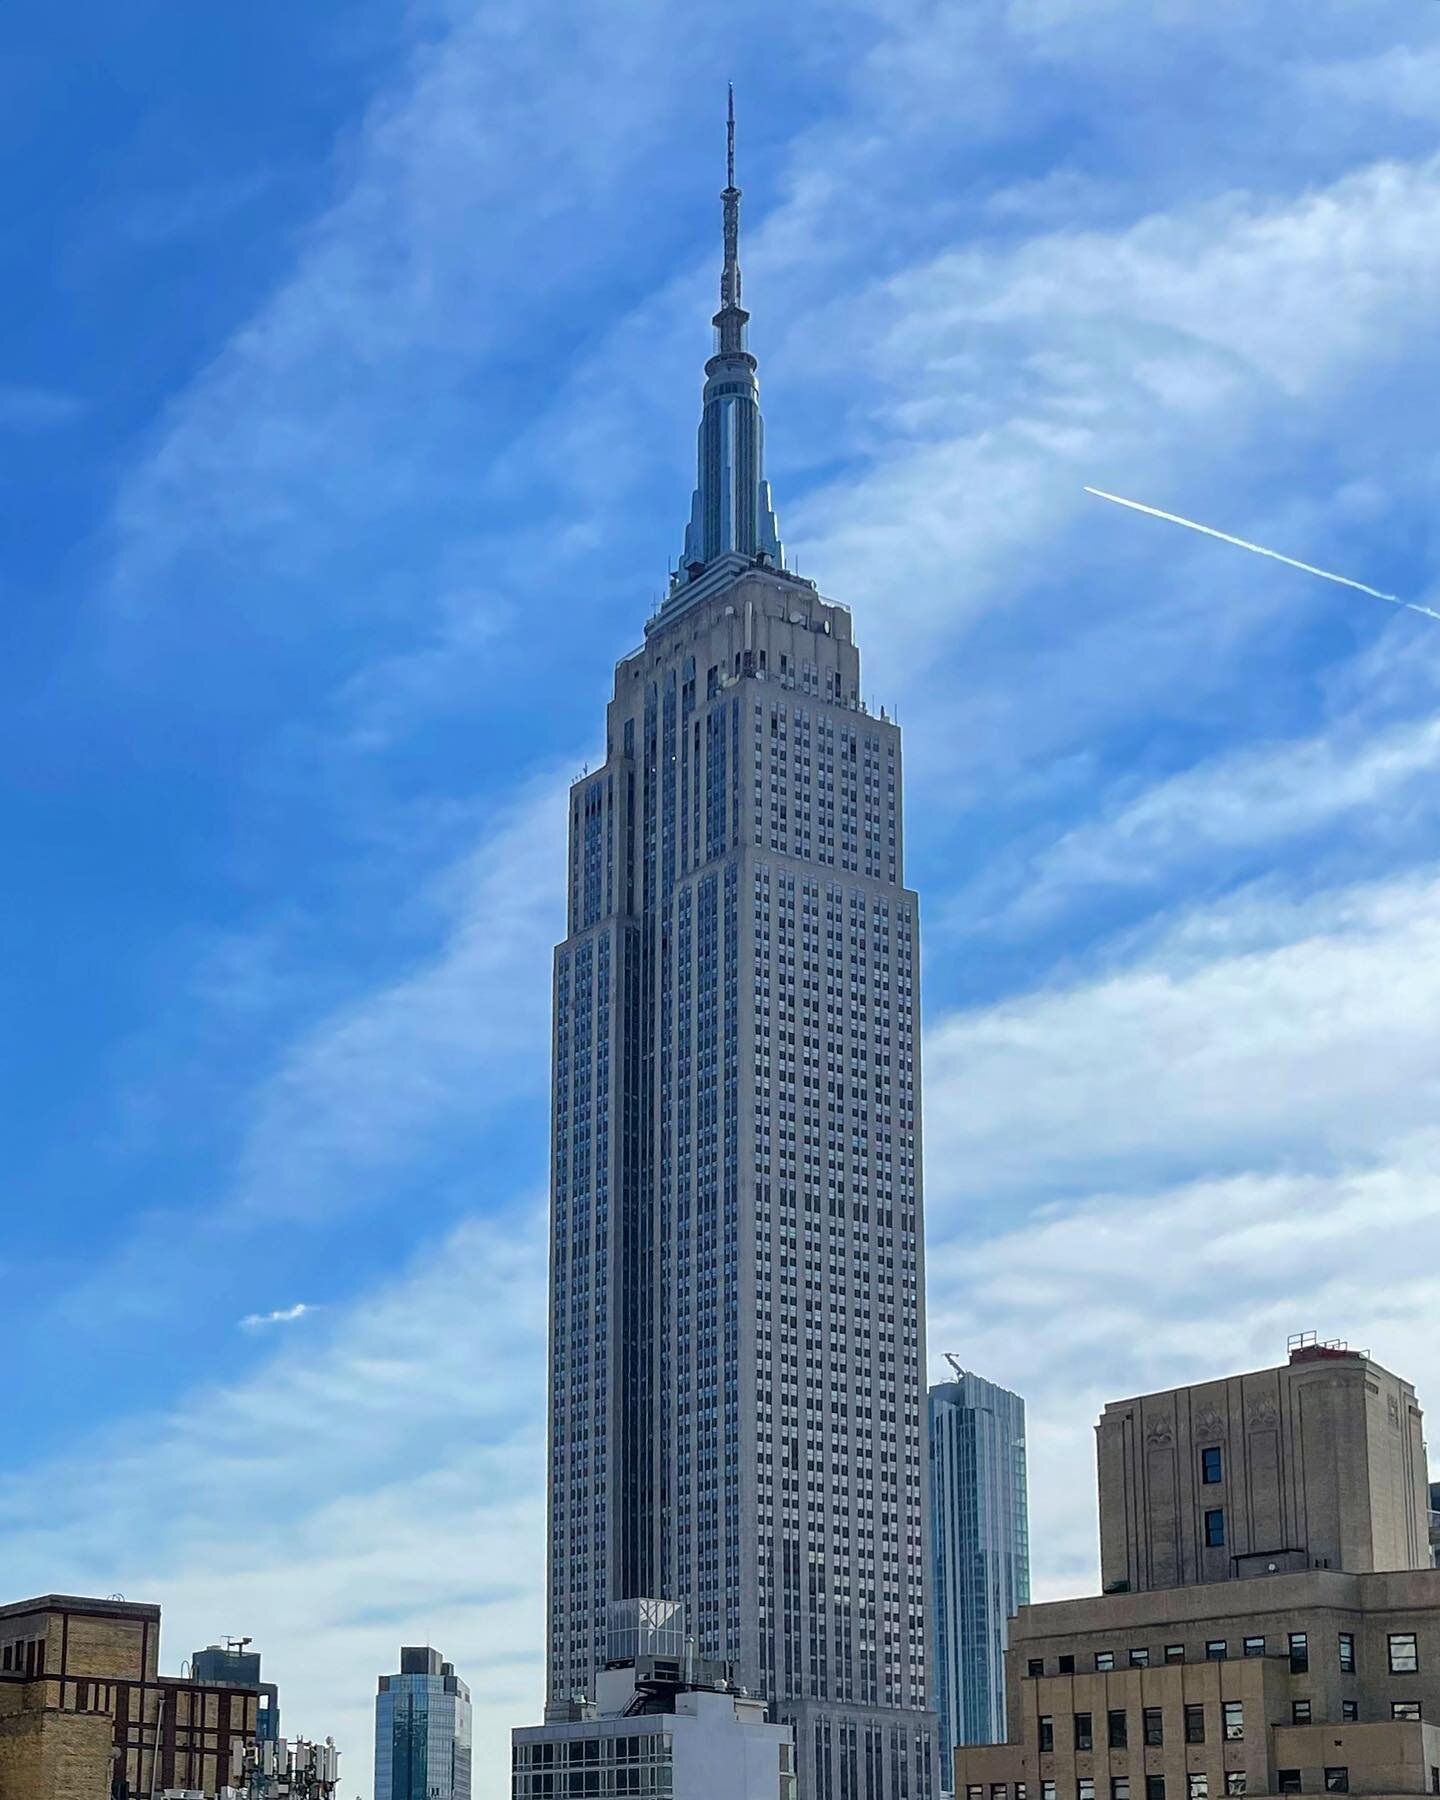 Empire State of Mind
.
.
.
.
.
#linkedin #newyork #skyscraper #empirestatebuilding #skyline #nycskyline #nycskyscrapers #engineering #architecture #realestate #nycrealestate #officeviews #ilovenyc #imissnyc #newyorkcity #manhattan